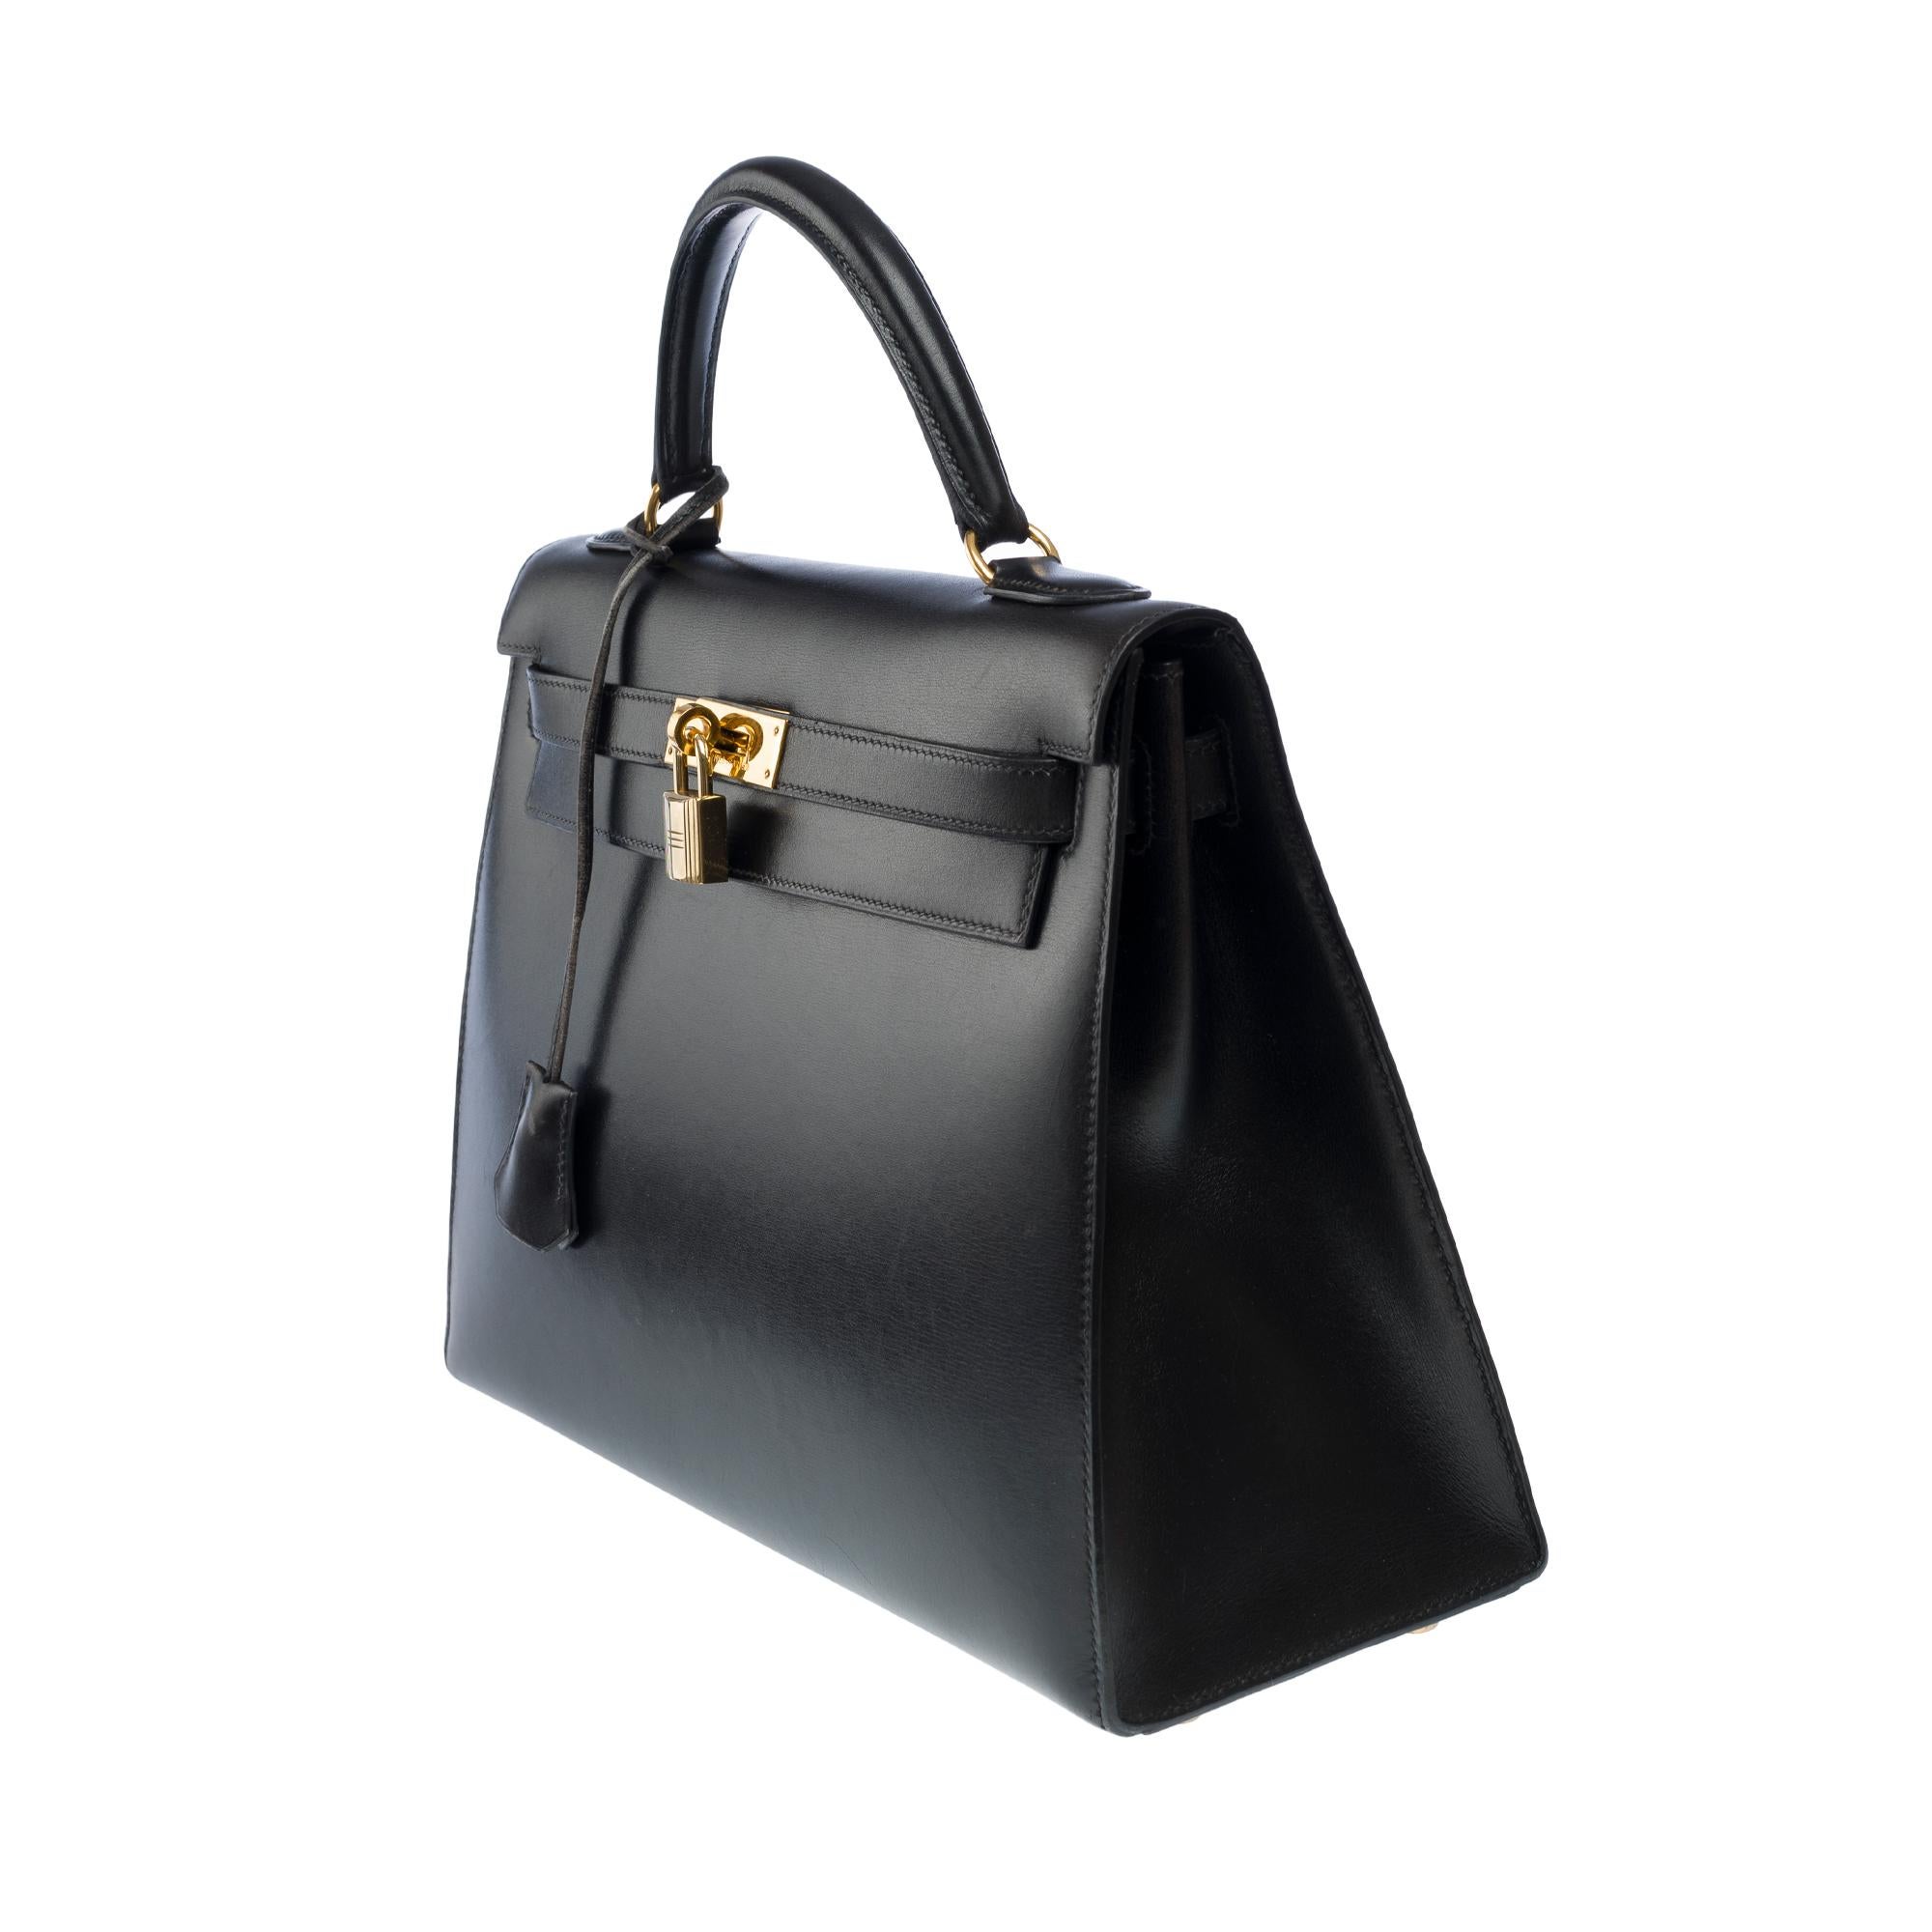 Vintage Hermès Kelly 32 sellier handbag strap in Black Box Calf leather, GHW 1